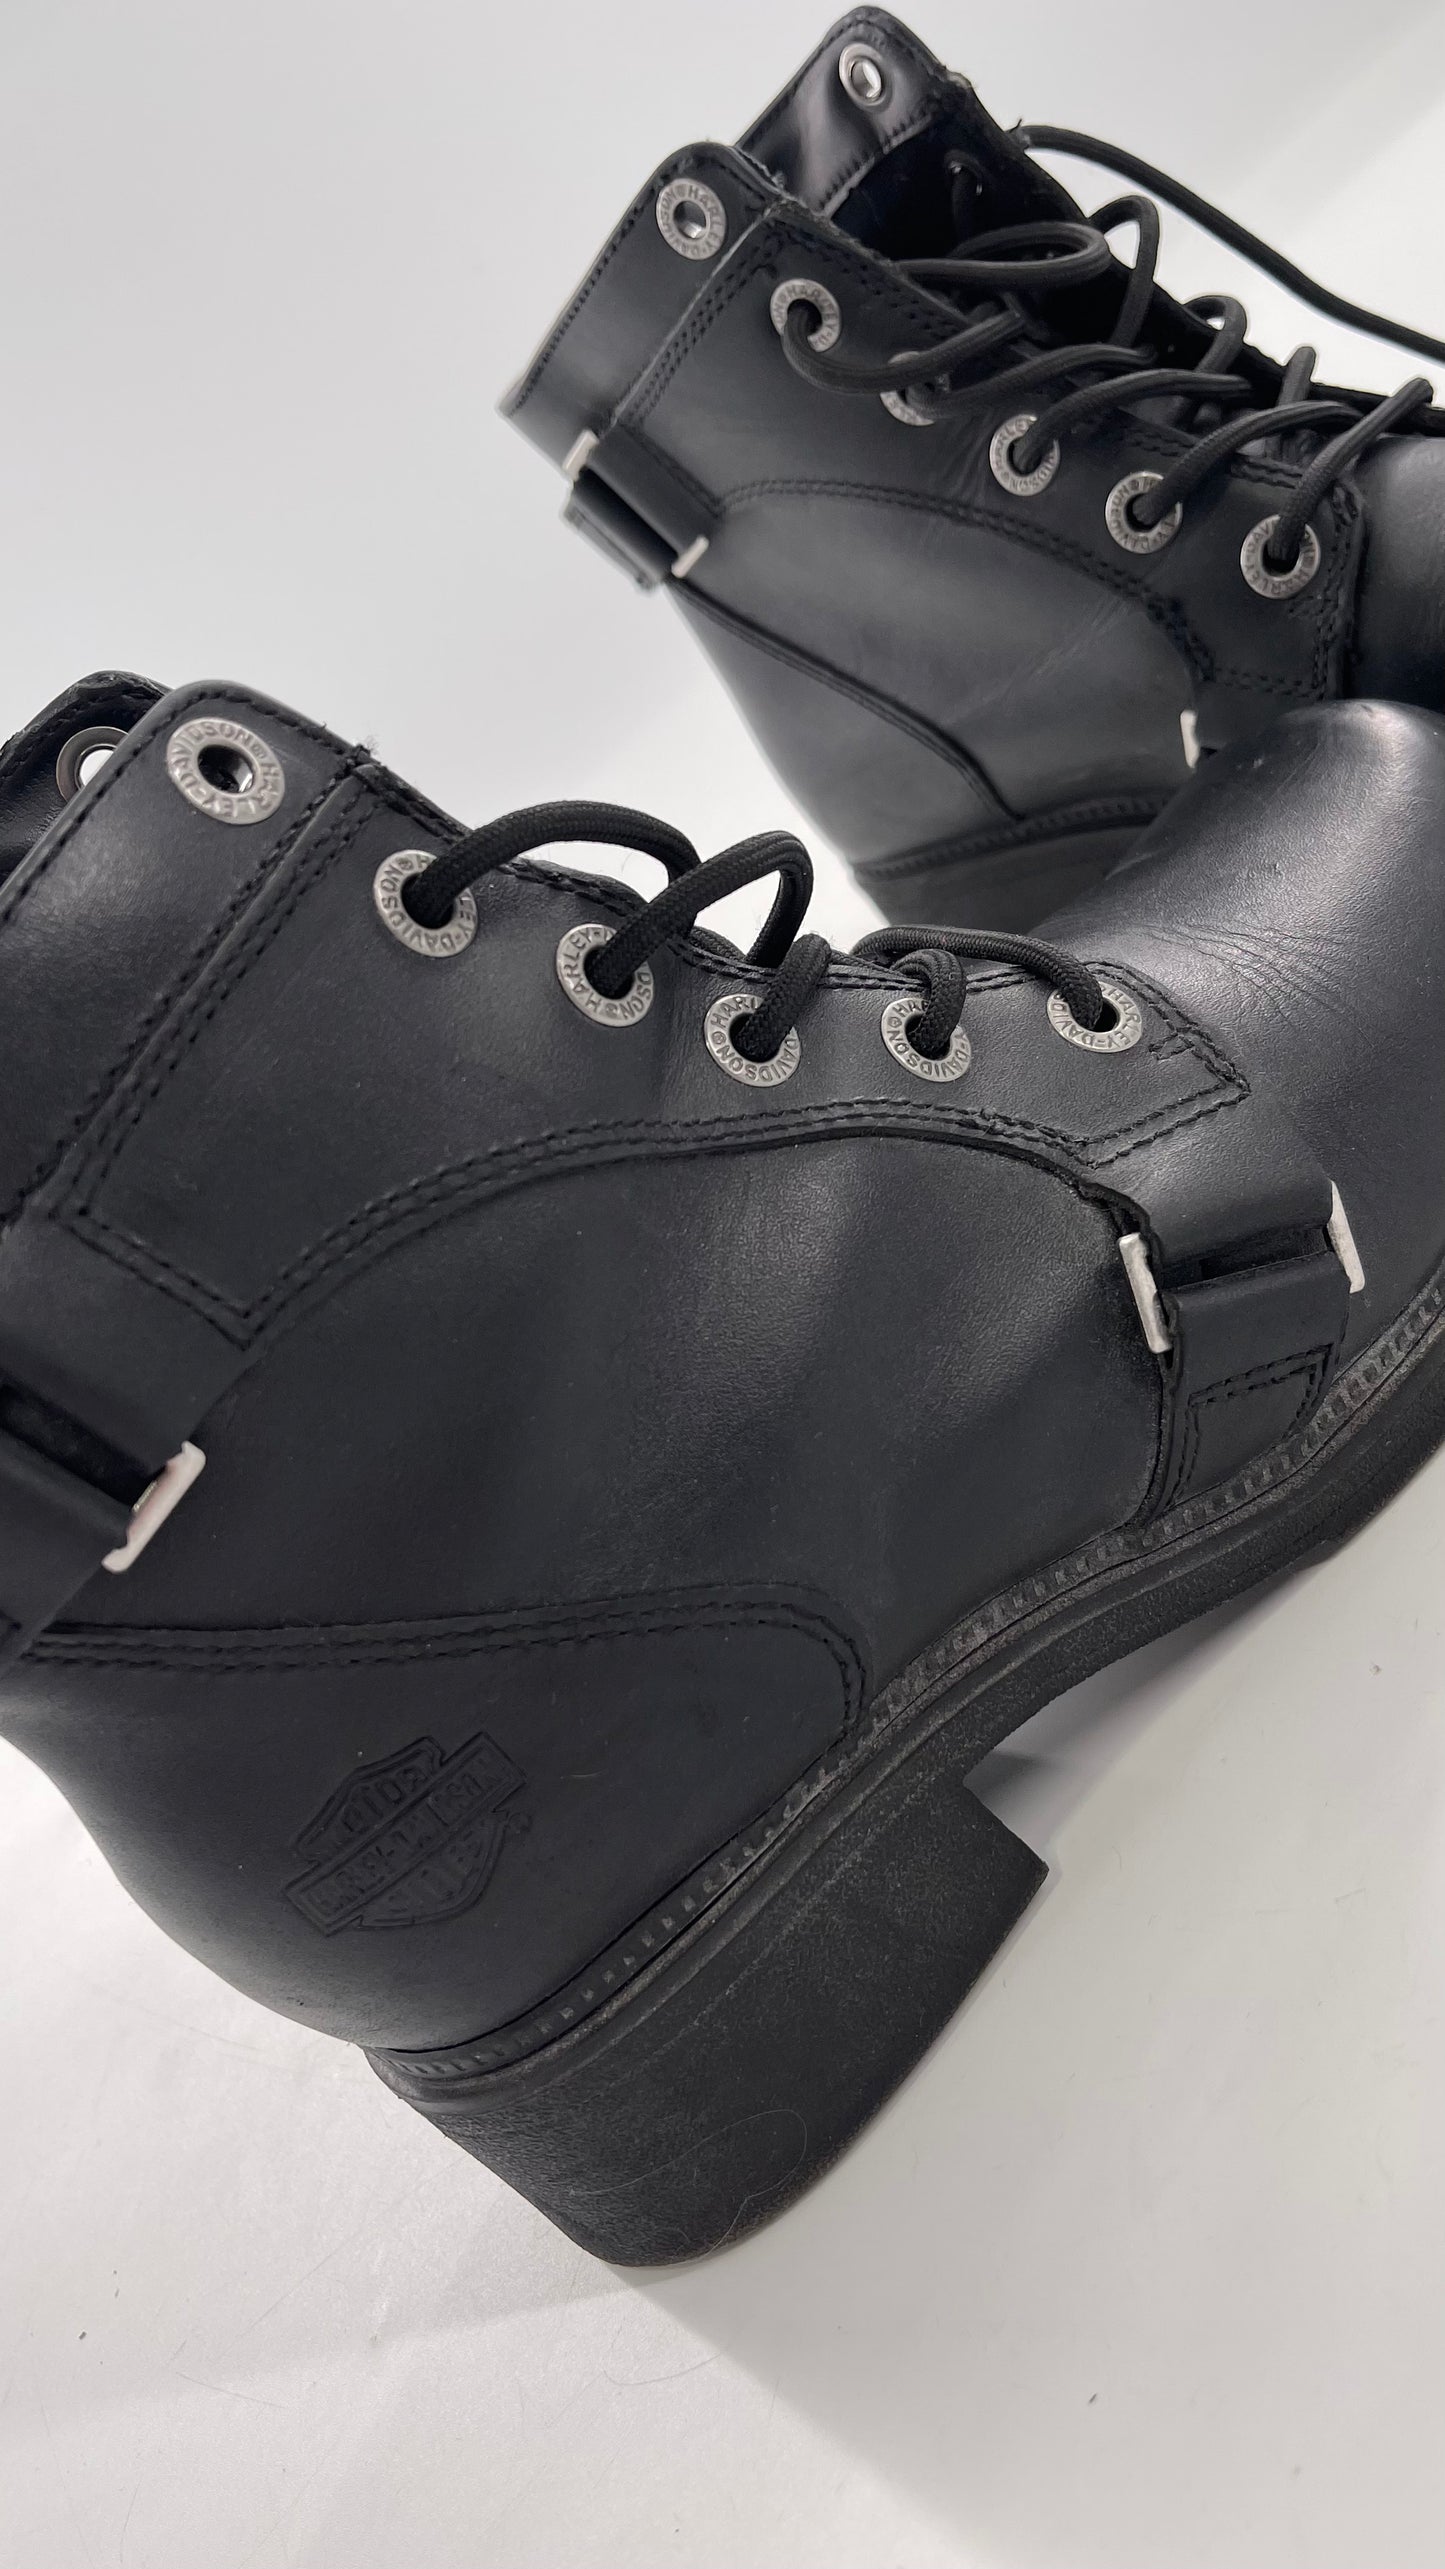 Harley Davidson Black Leather Combat Boots (8.5)